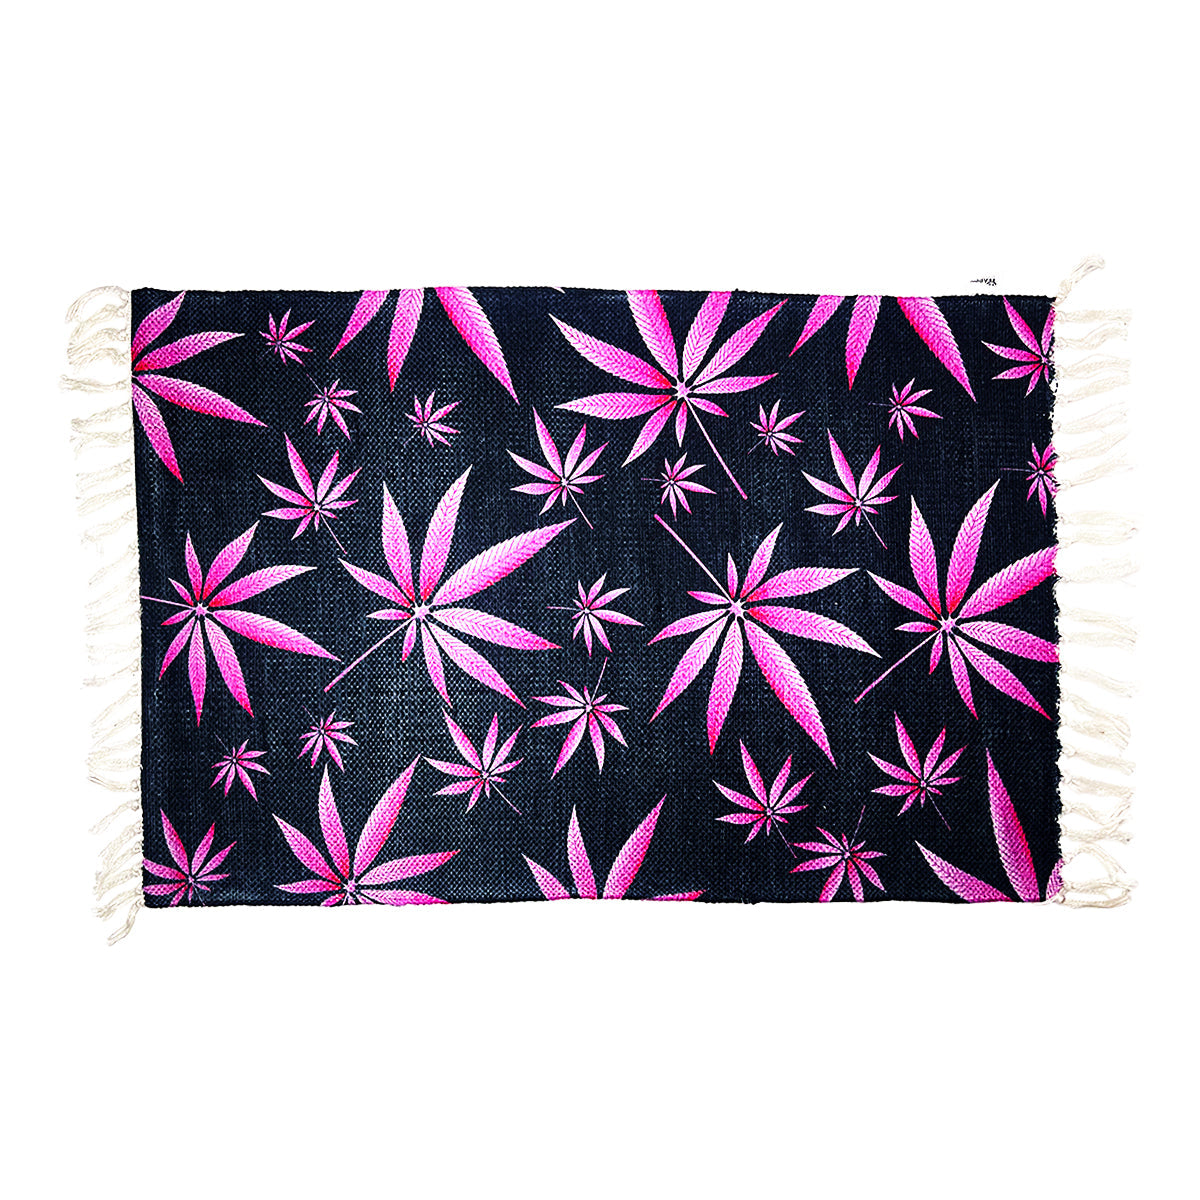 Handloom Printed Pink Weed Leaf Design Doormat Size 2ft x 3ft